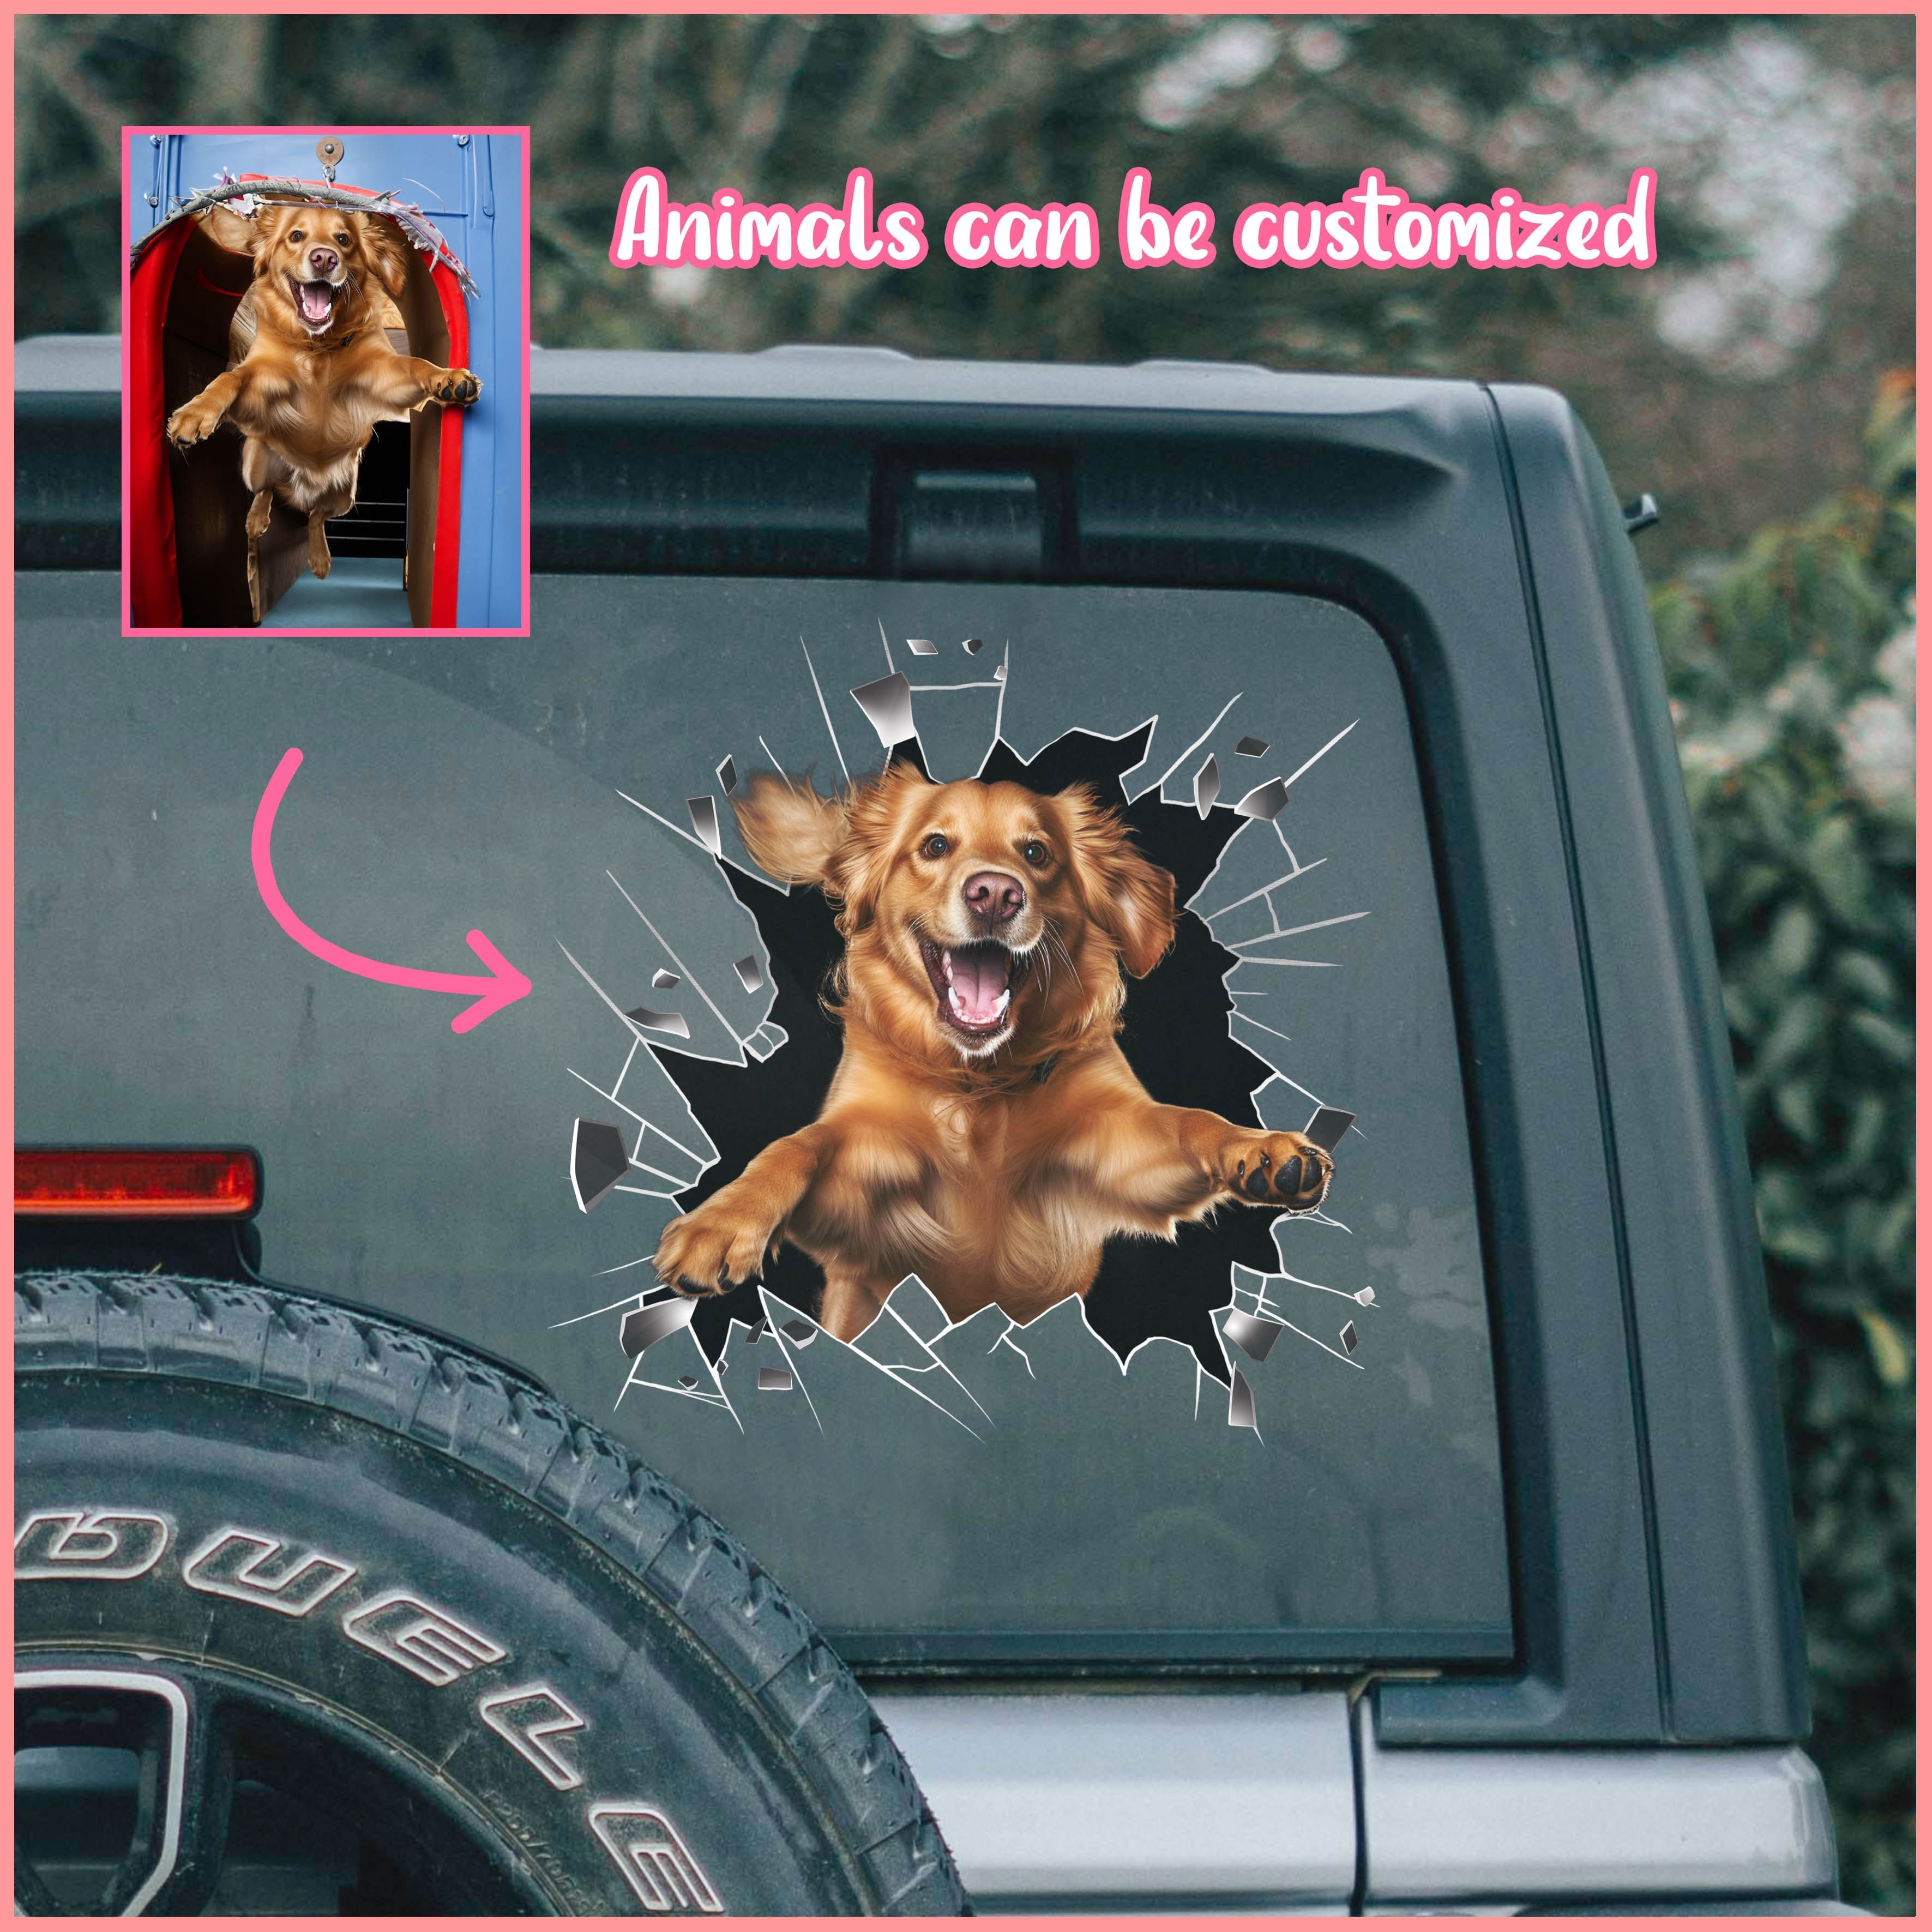 Golden Retriever Shepherd car decal, Animals can be customized